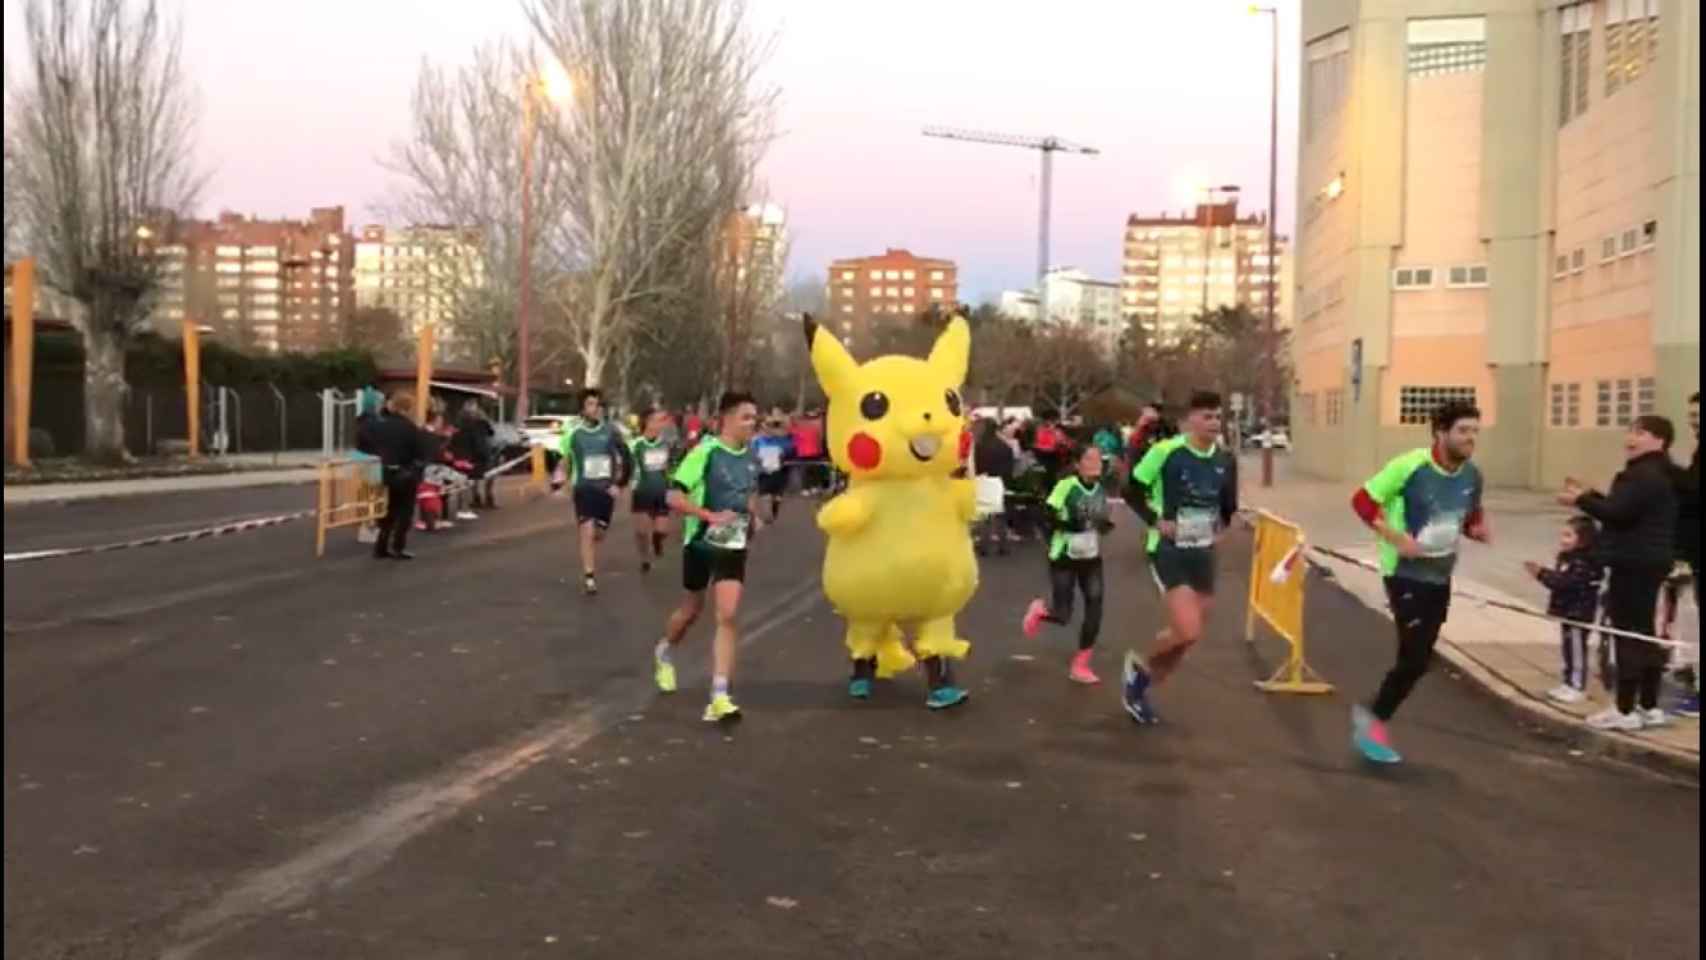 Sergio corrió la San SIlvestre vestido de Pikachu gigante